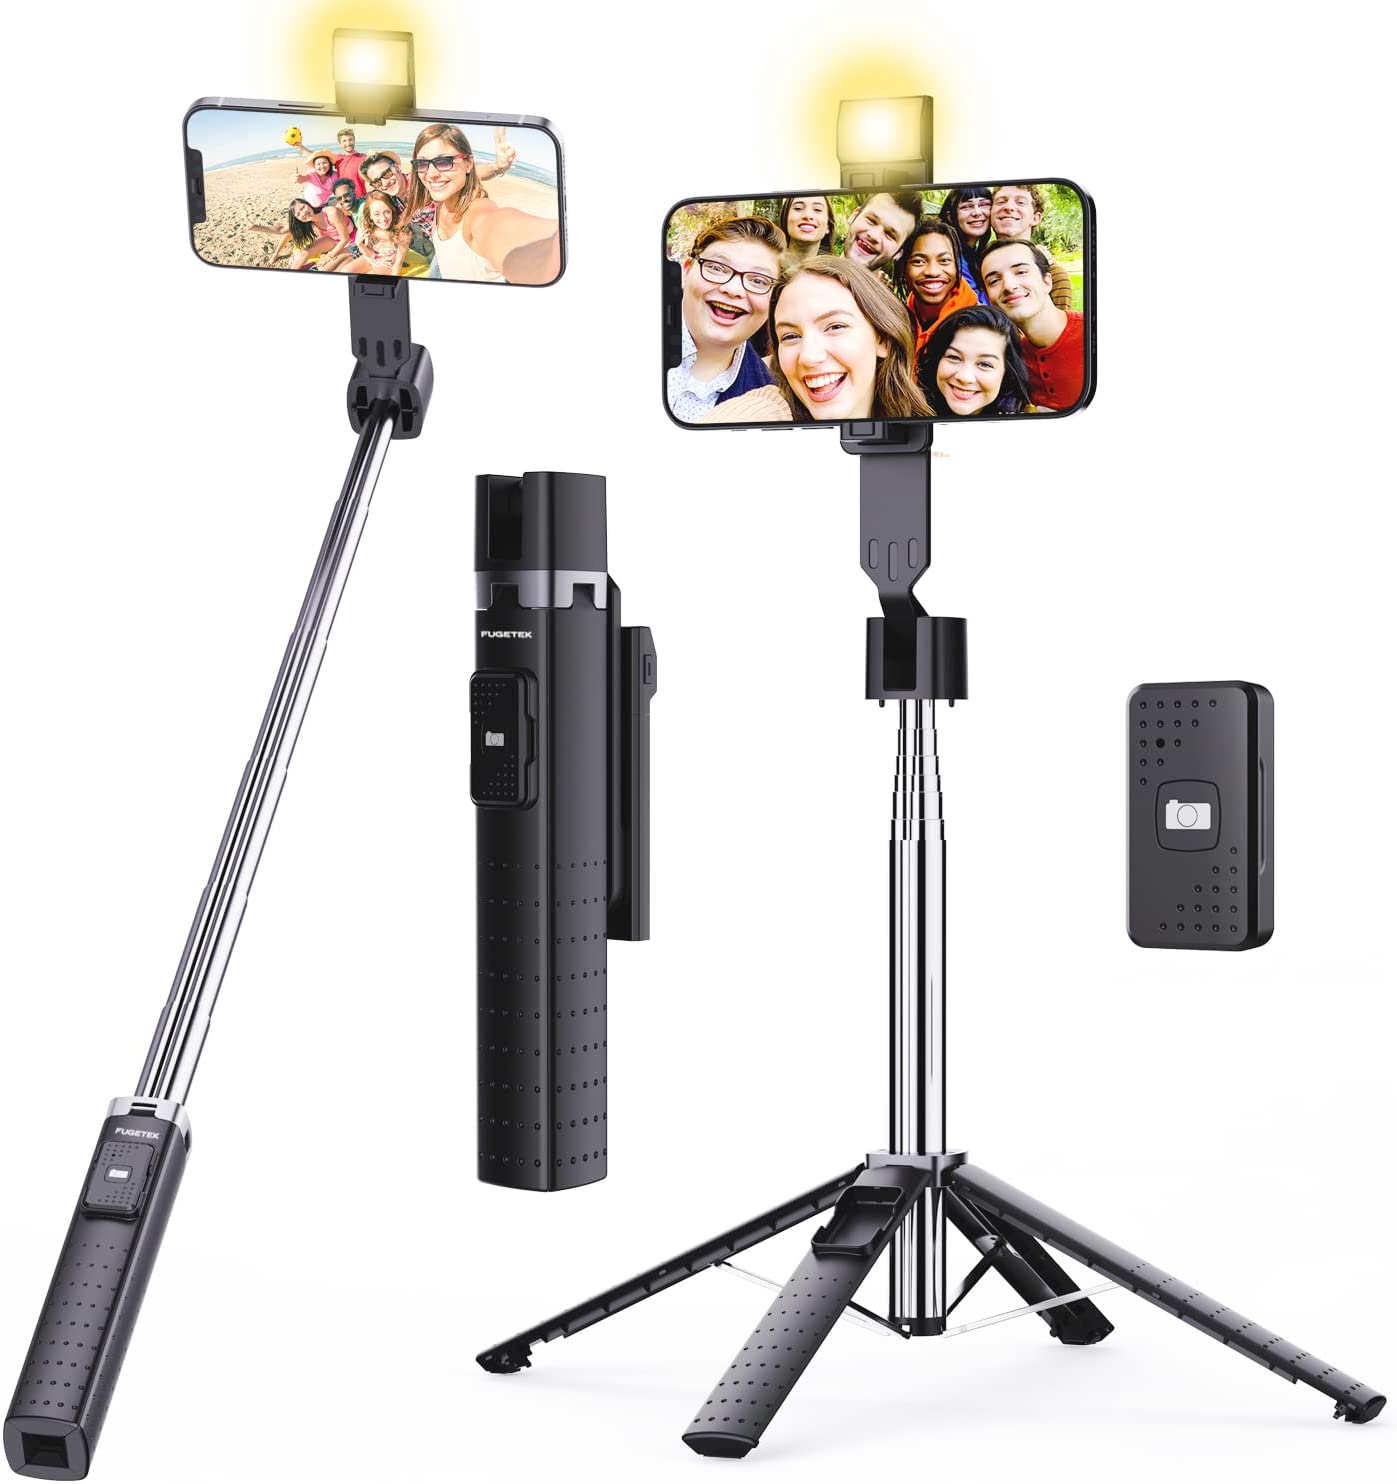 Fugetek FT-568 Selfie Stick Review: A Sturdy, High-End Selfie Stick